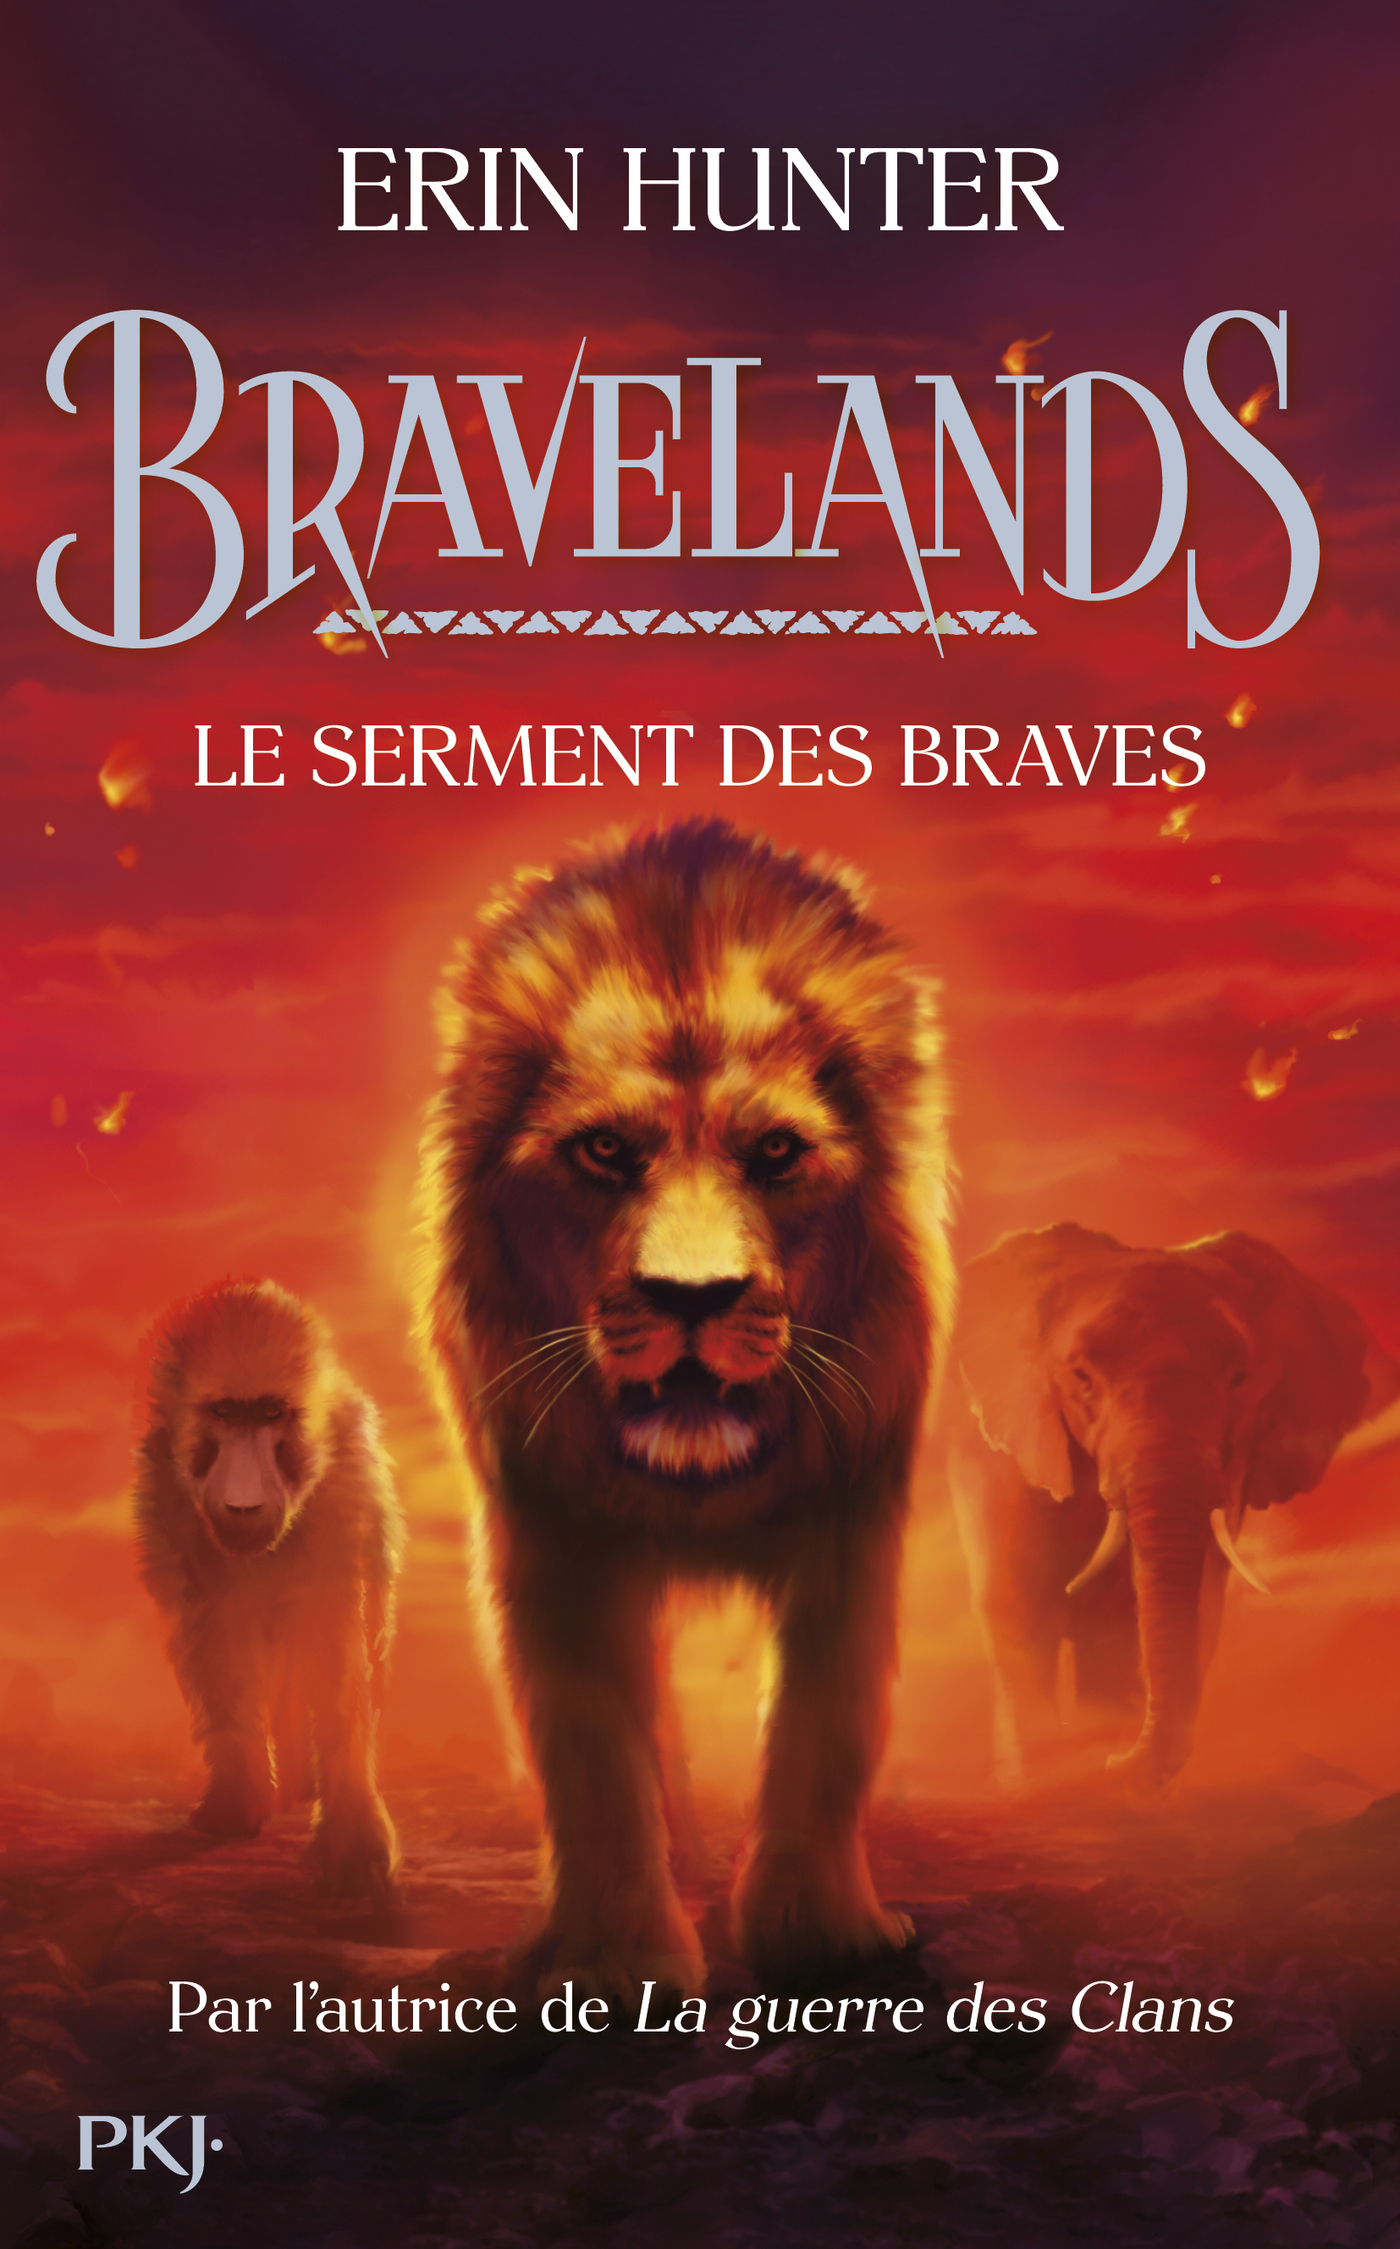 Afficher "Bravelands - tome 06 : Le serment"